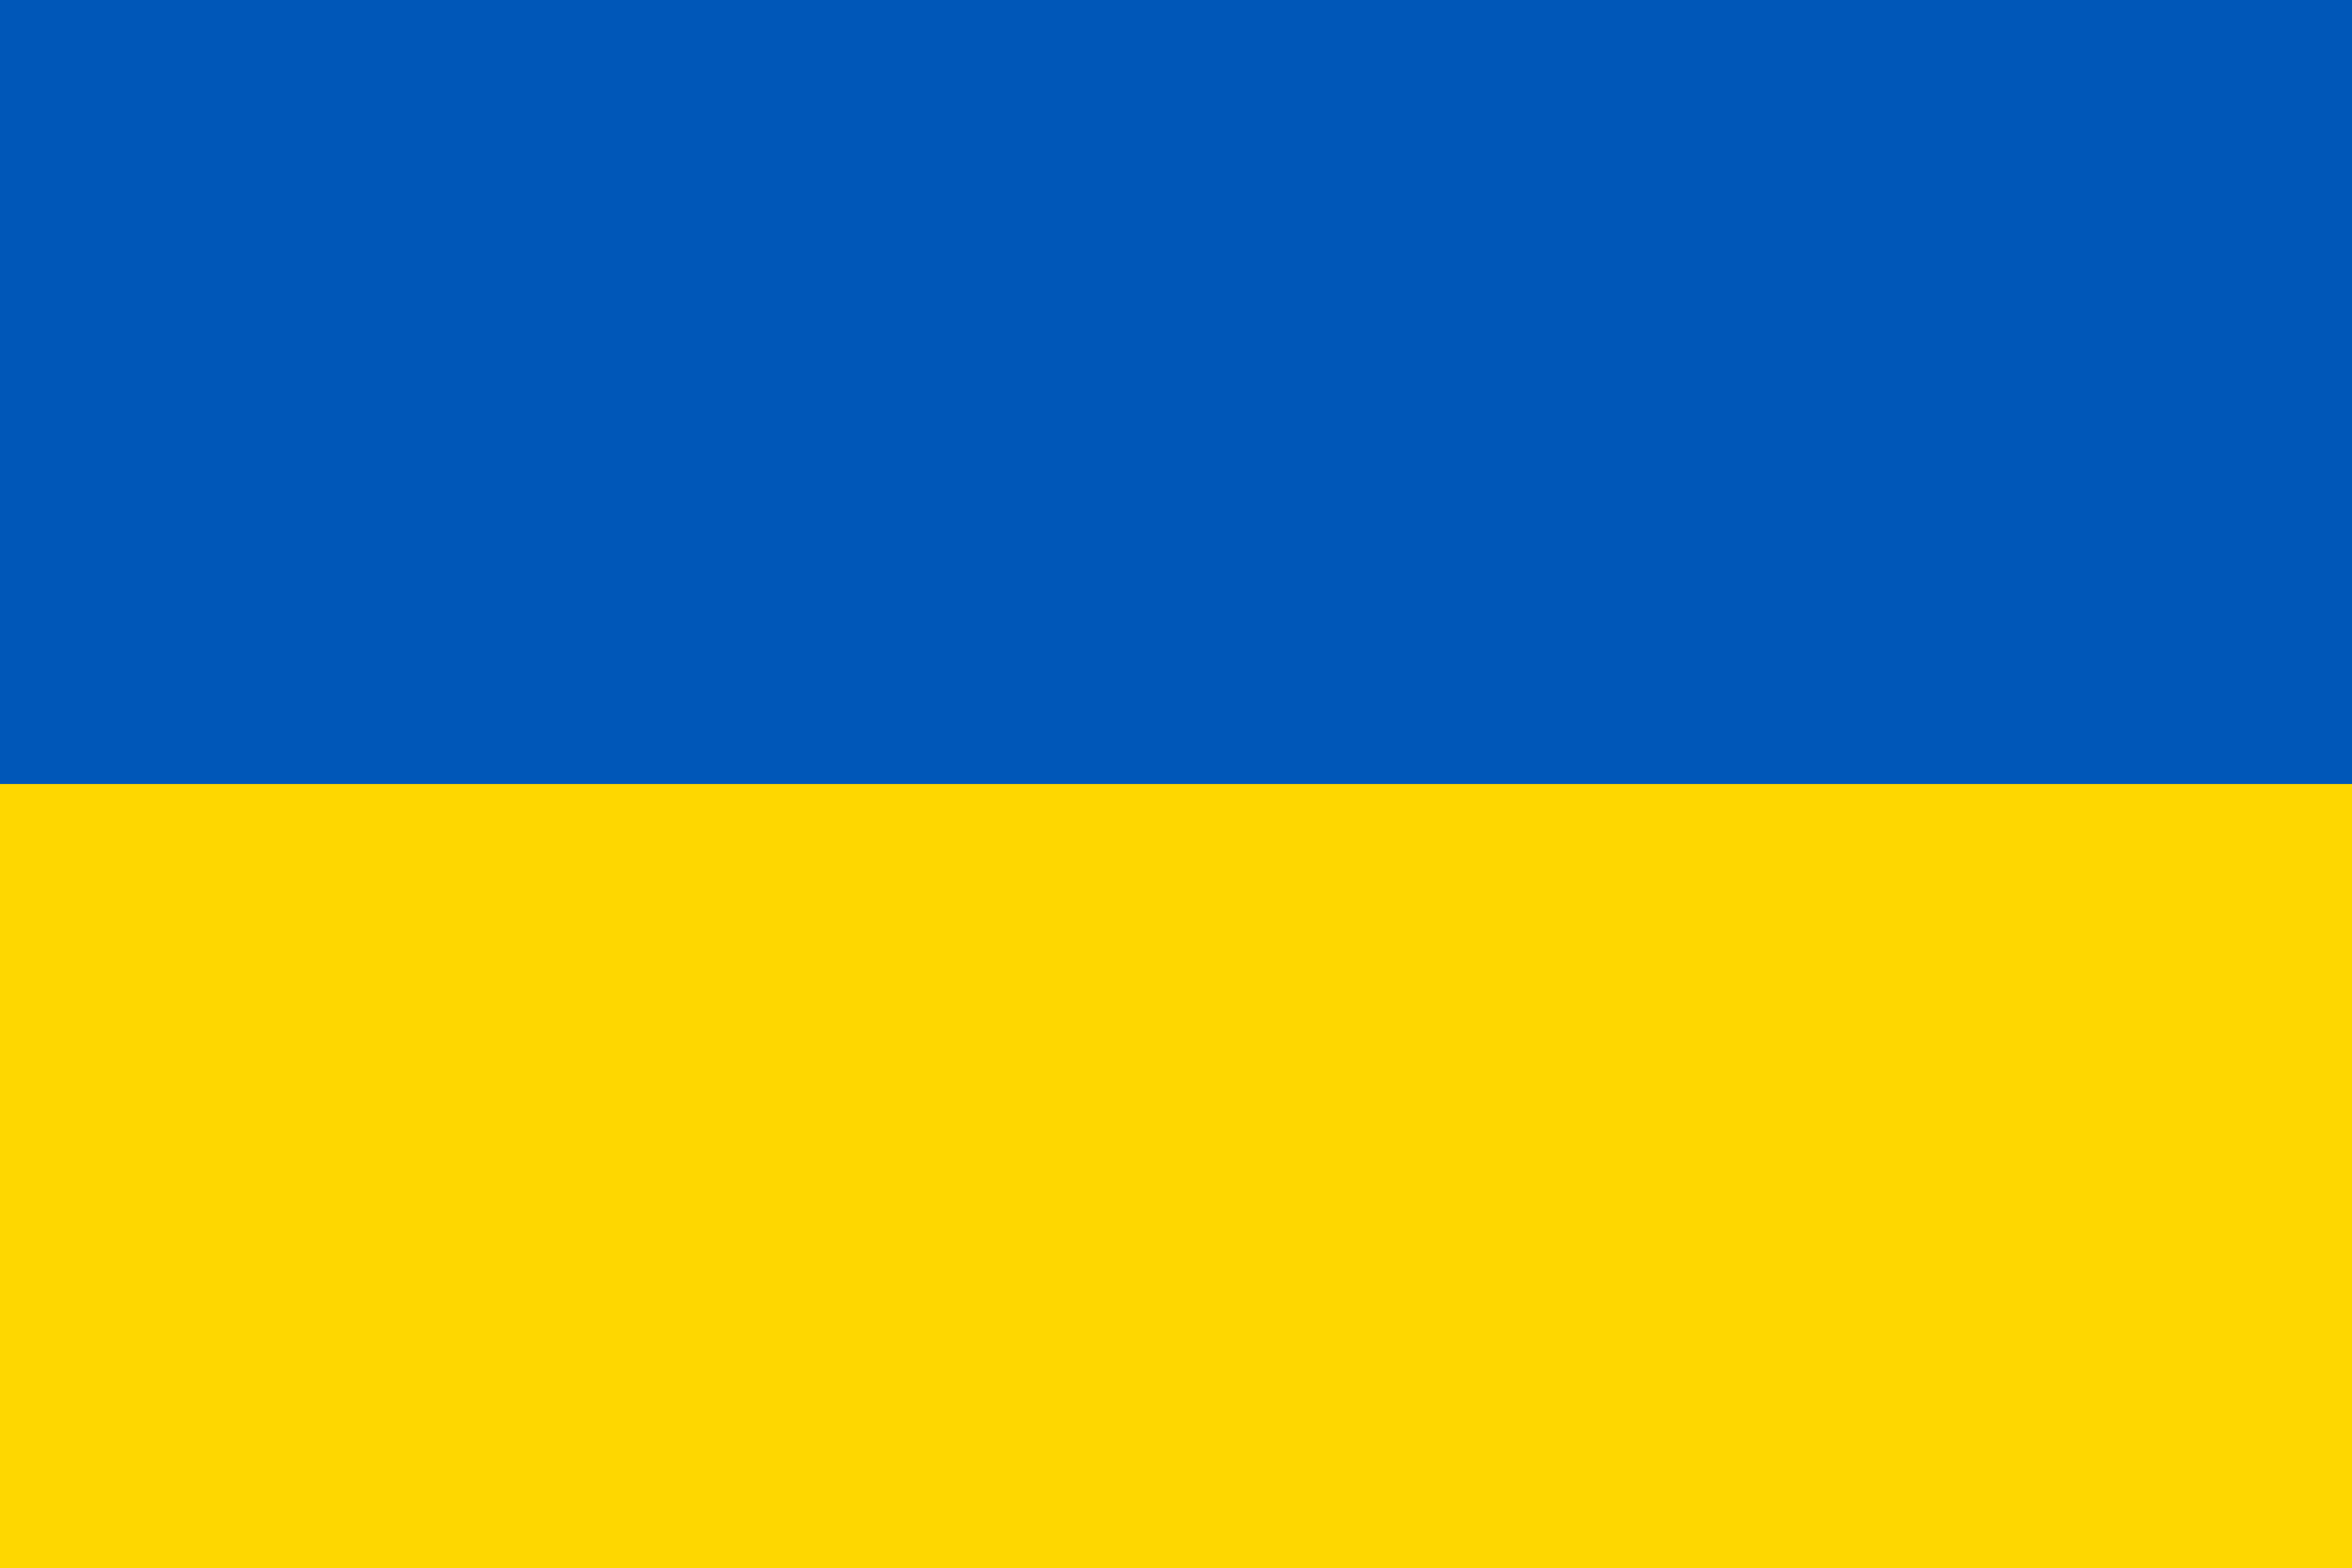 Image for topic Ukraine